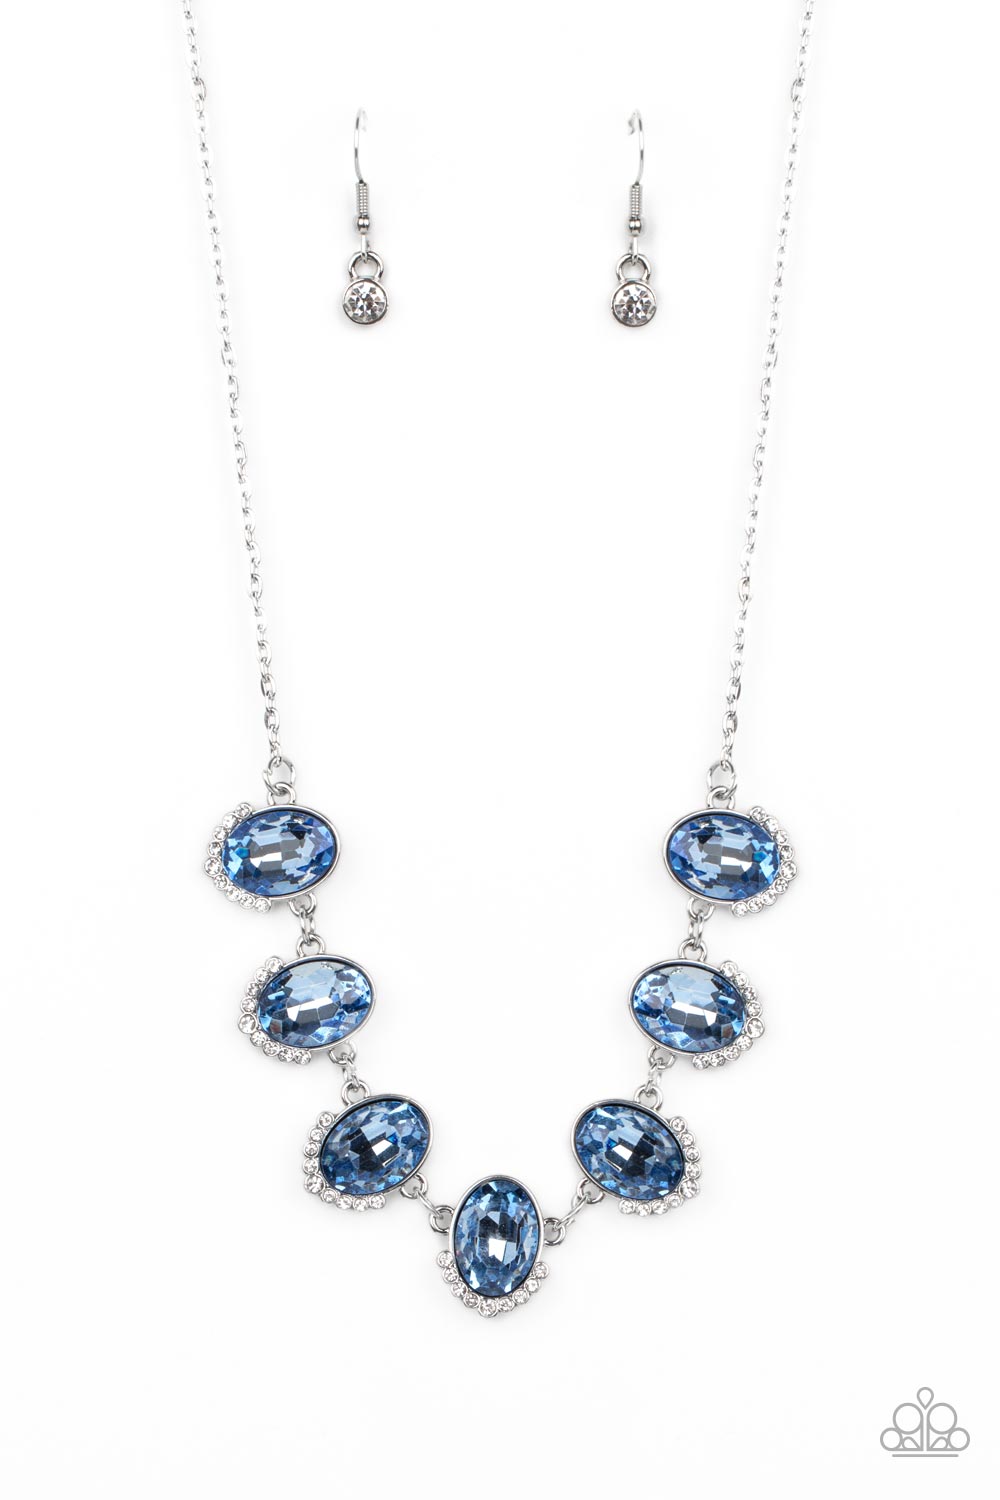 unleash-your-sparkle-blue-rhinestone-necklace-paparazzi-accessories-lightbox-carasshopcom_1200x Diamond Necklace: Unleashing the Sparkle and Elegance